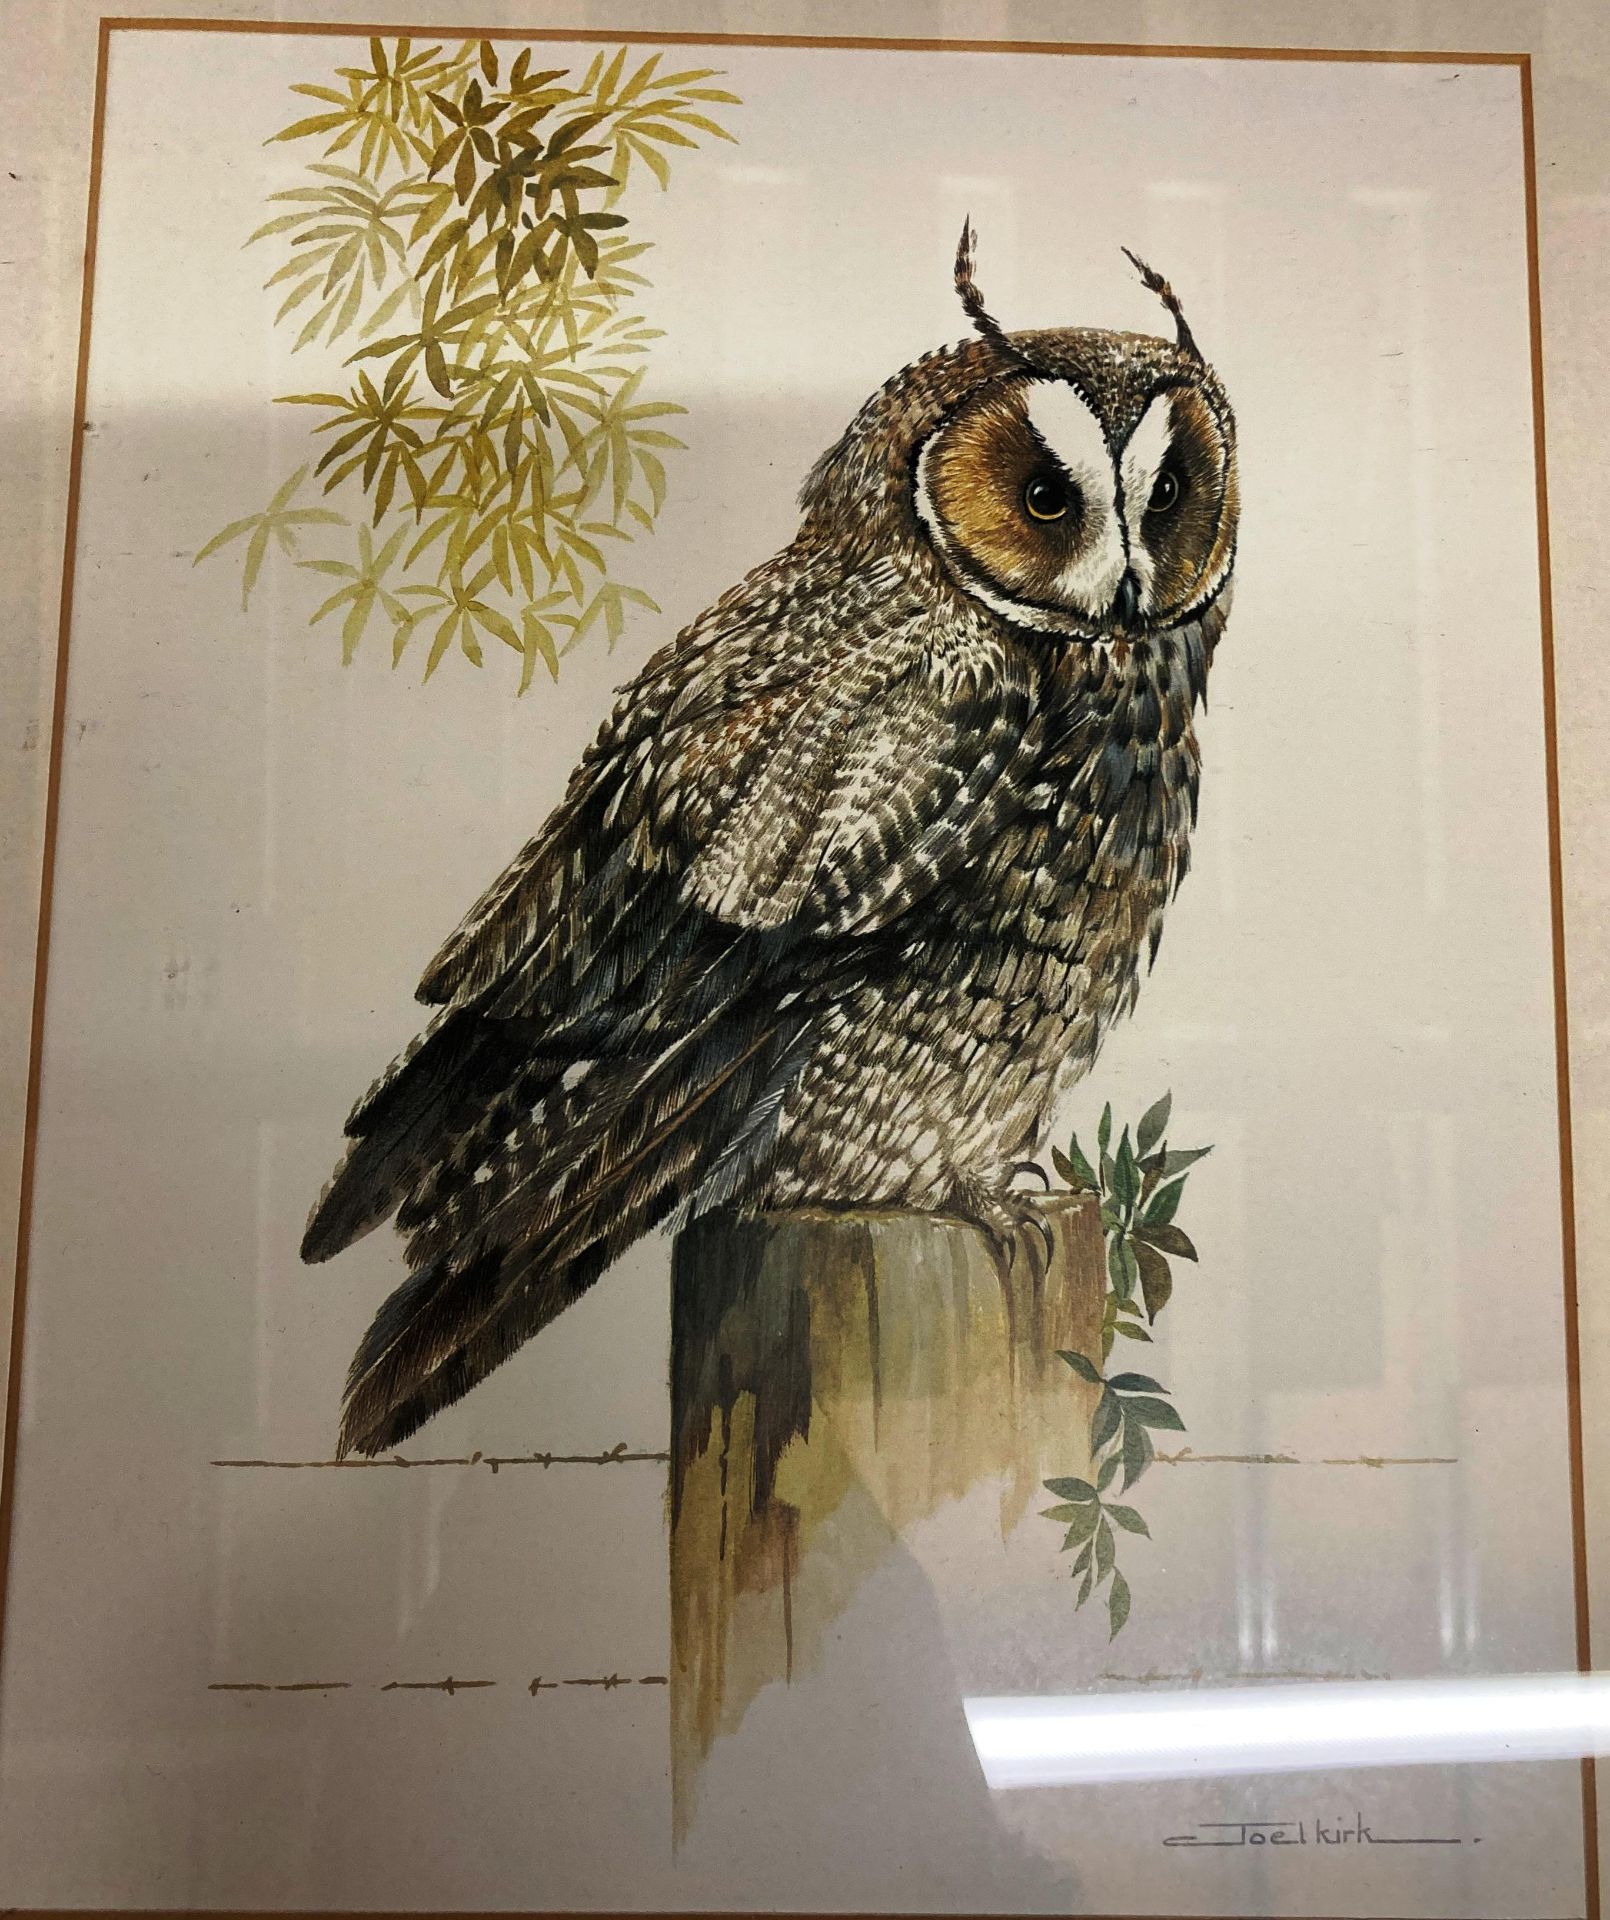 Five assorted owl framed prints by Joel Kirk and Vicki, - Image 2 of 4